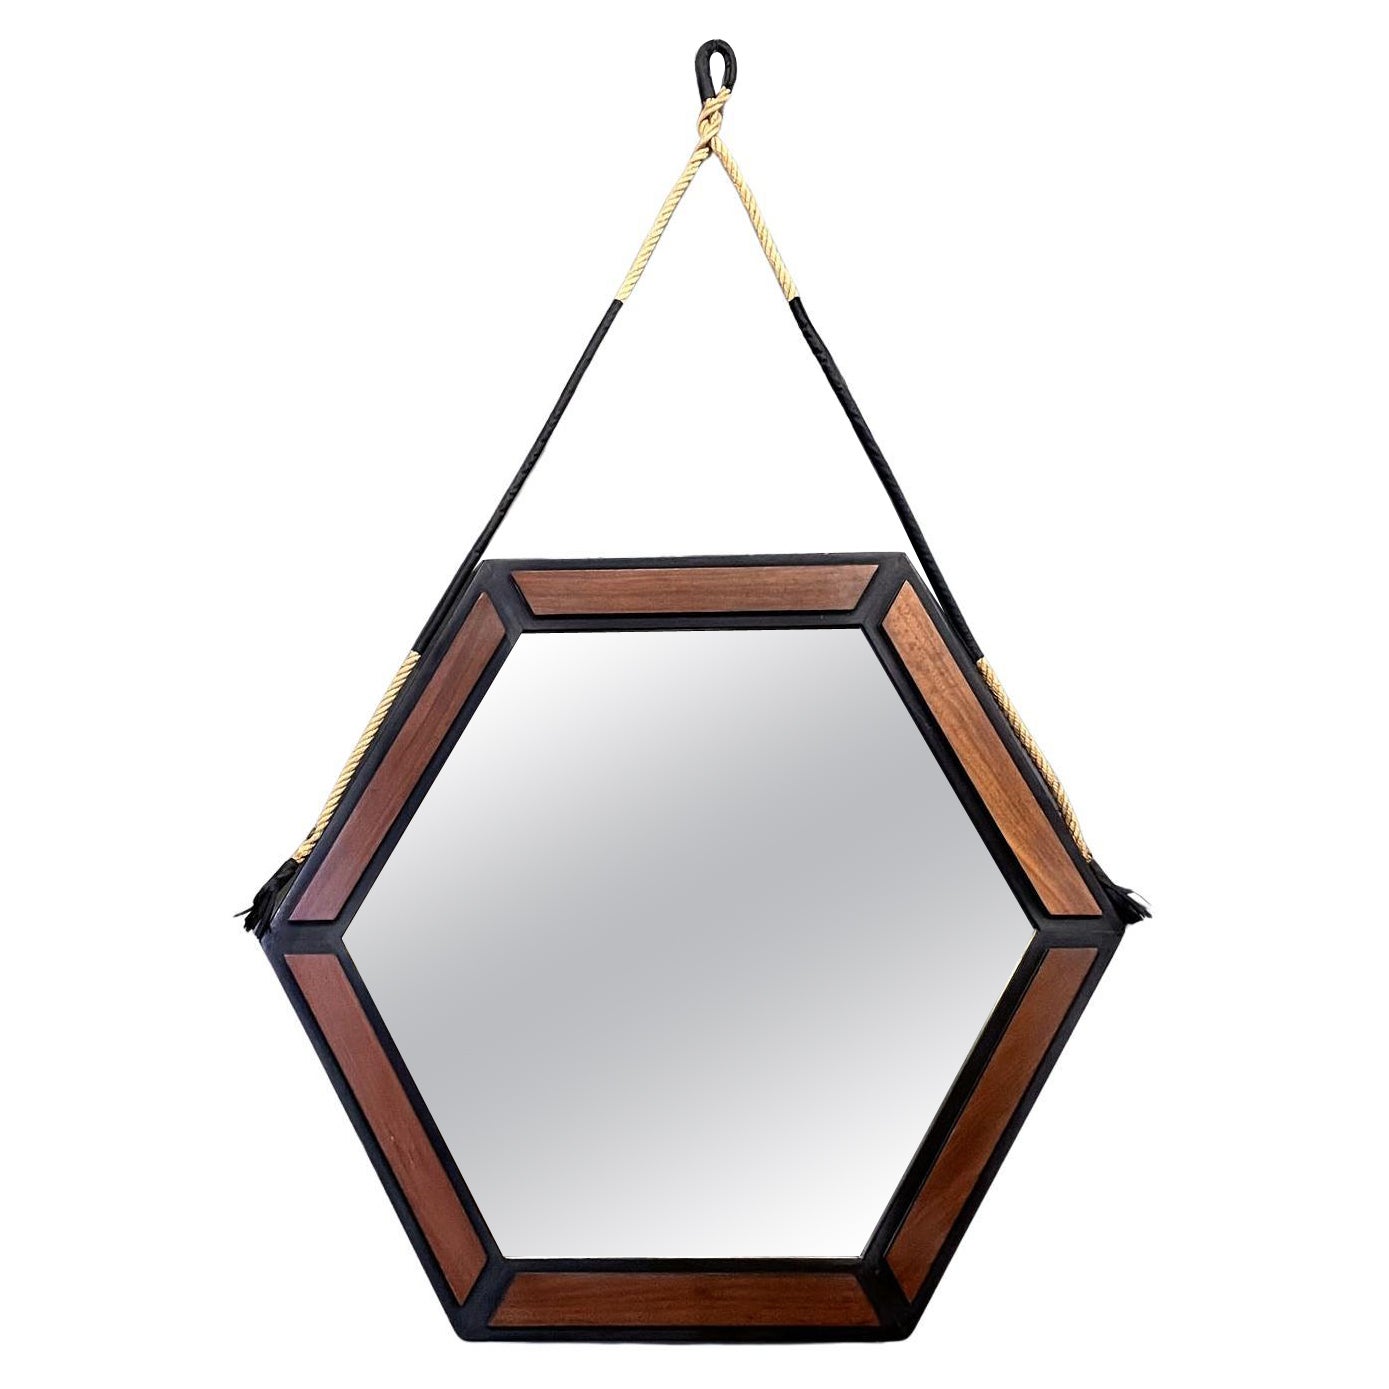 Italian mid-century modern hexagonal wooden wall mirror with rope, 1960s